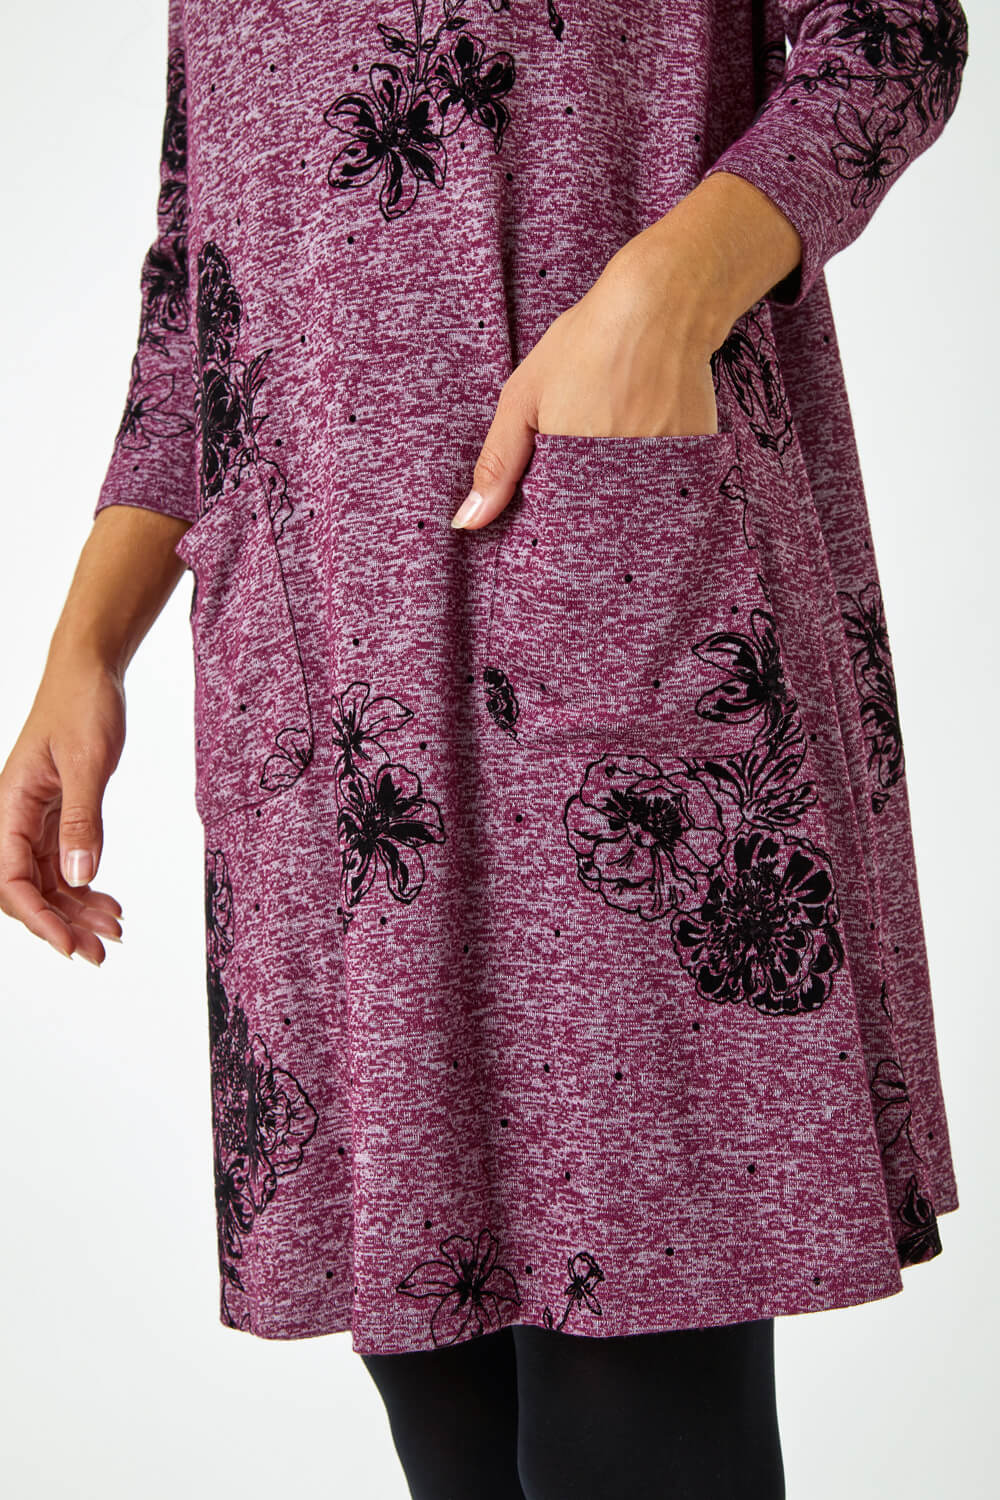 Wine Floral Pocket Swing Stretch Dress, Image 5 of 5